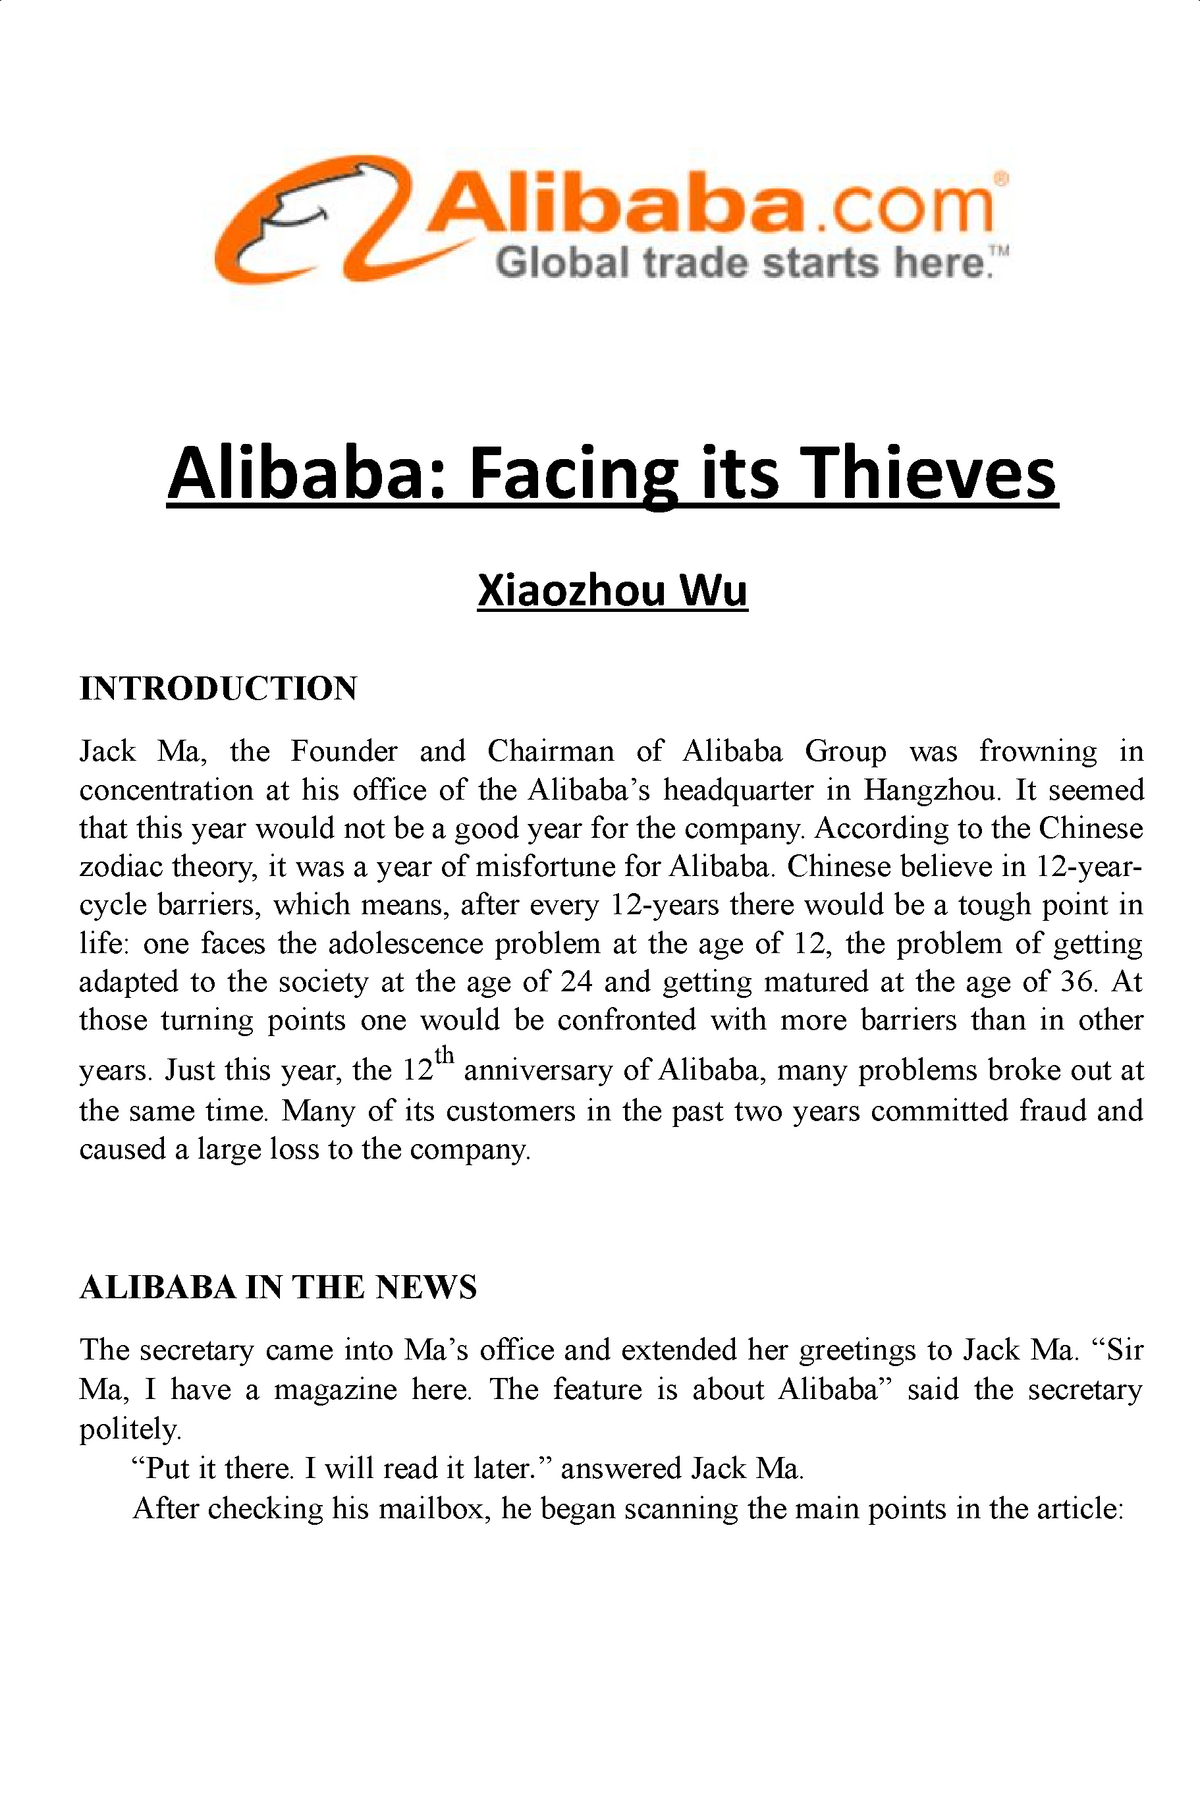 alibaba.com case study